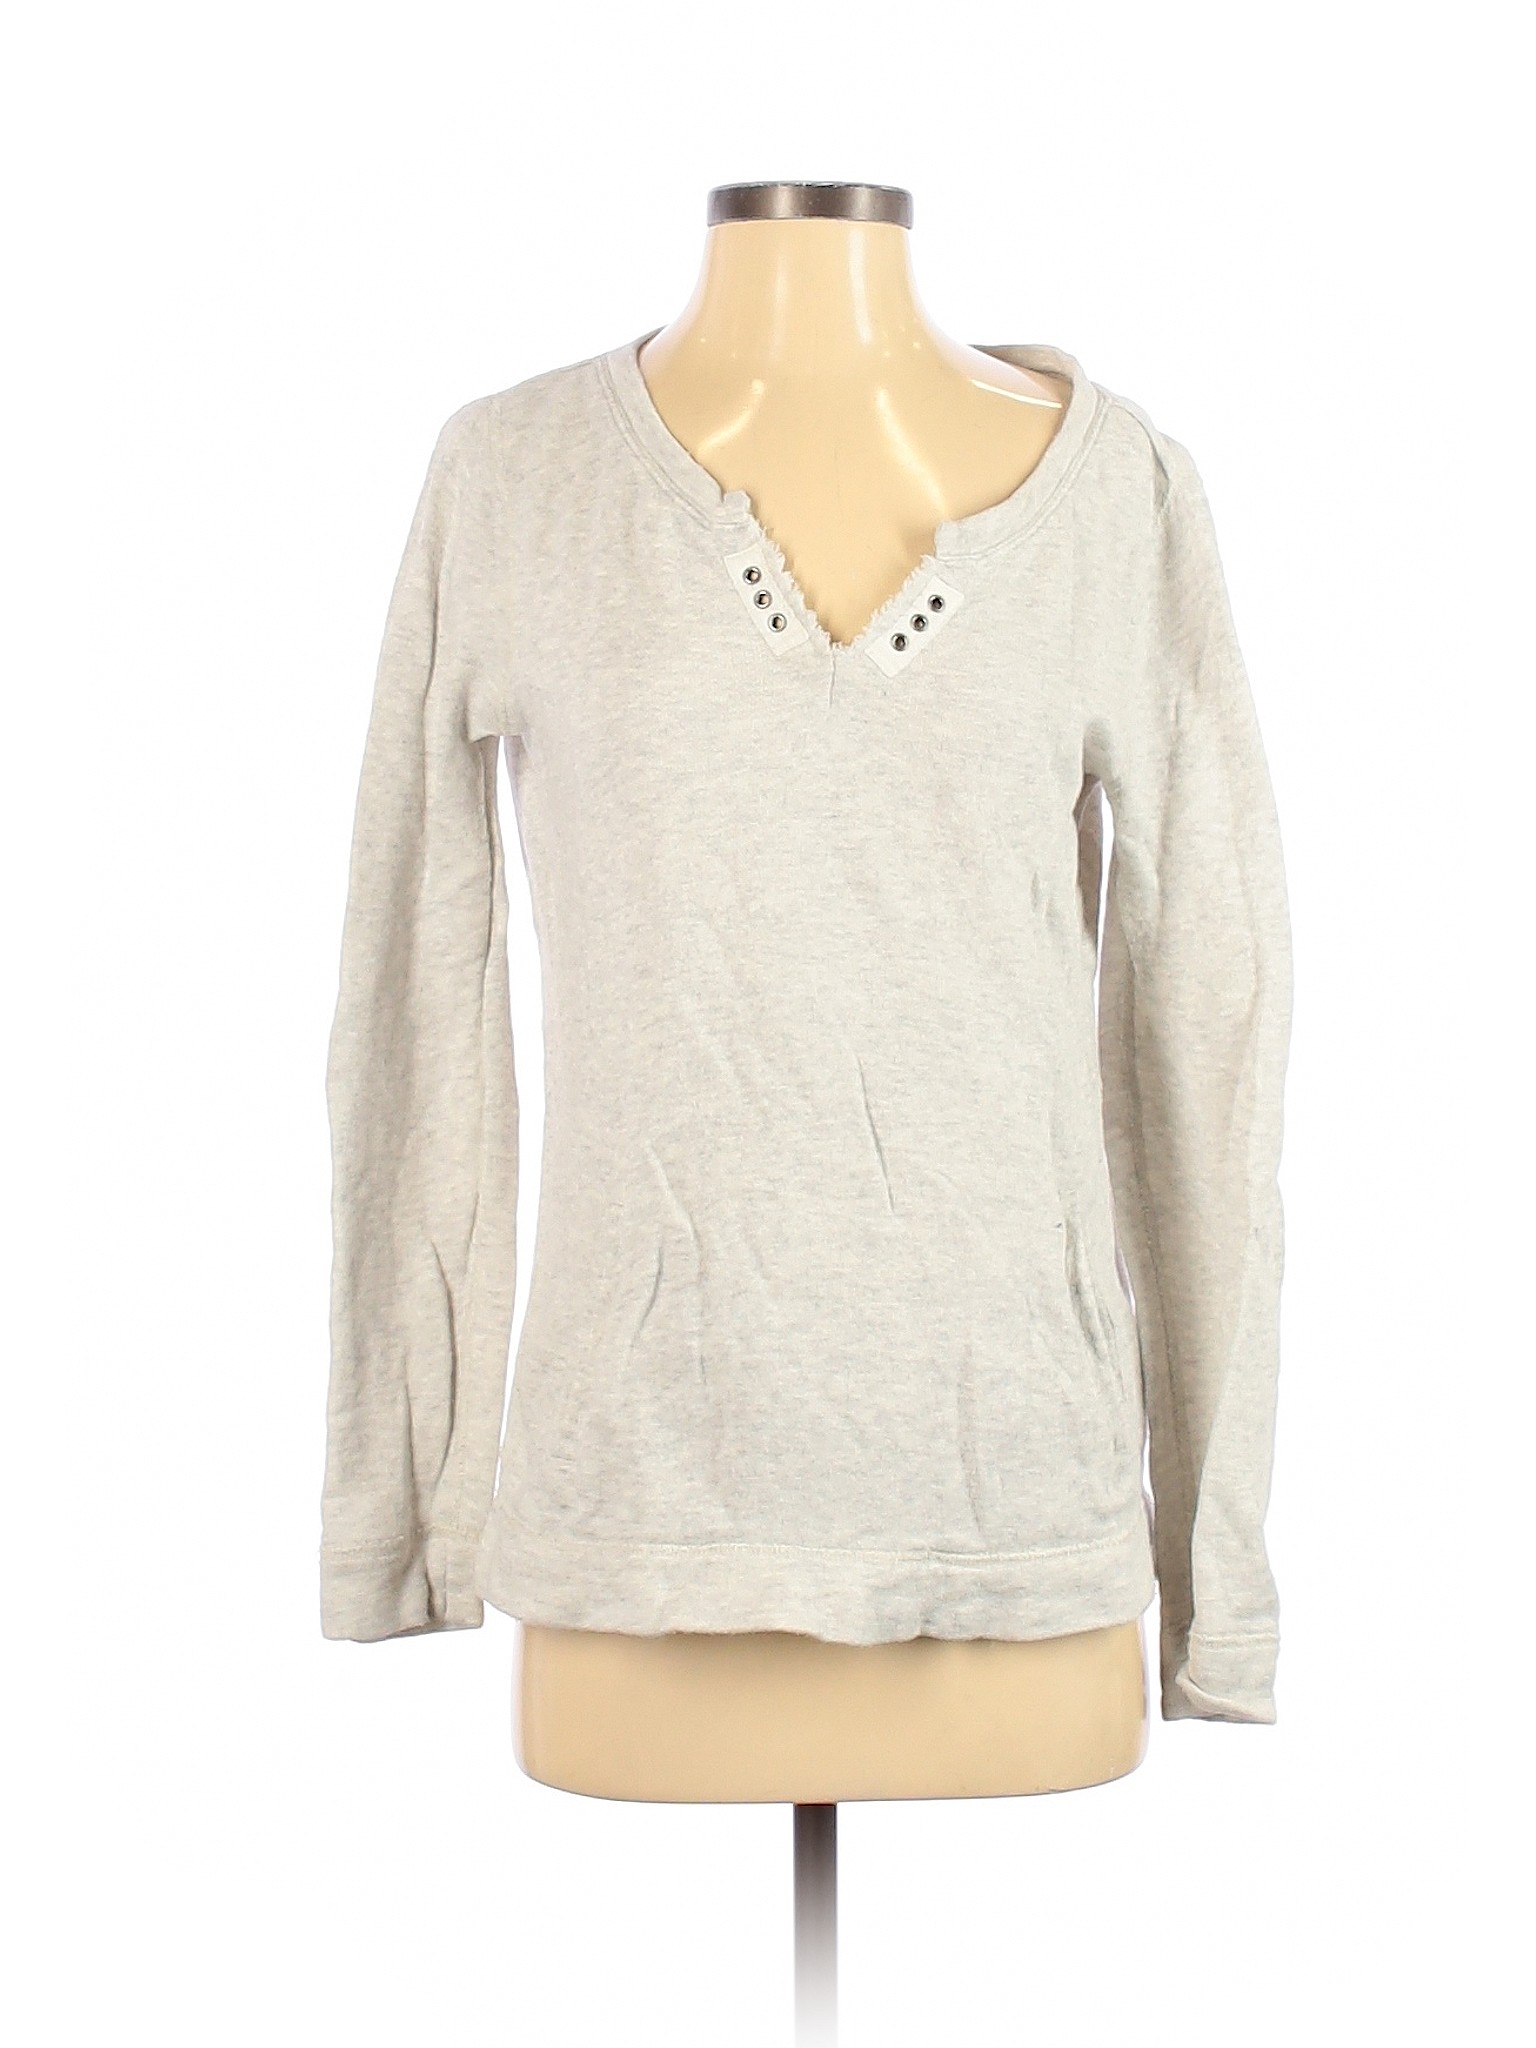 J.Crew Women Ivory Sweatshirt XS | eBay